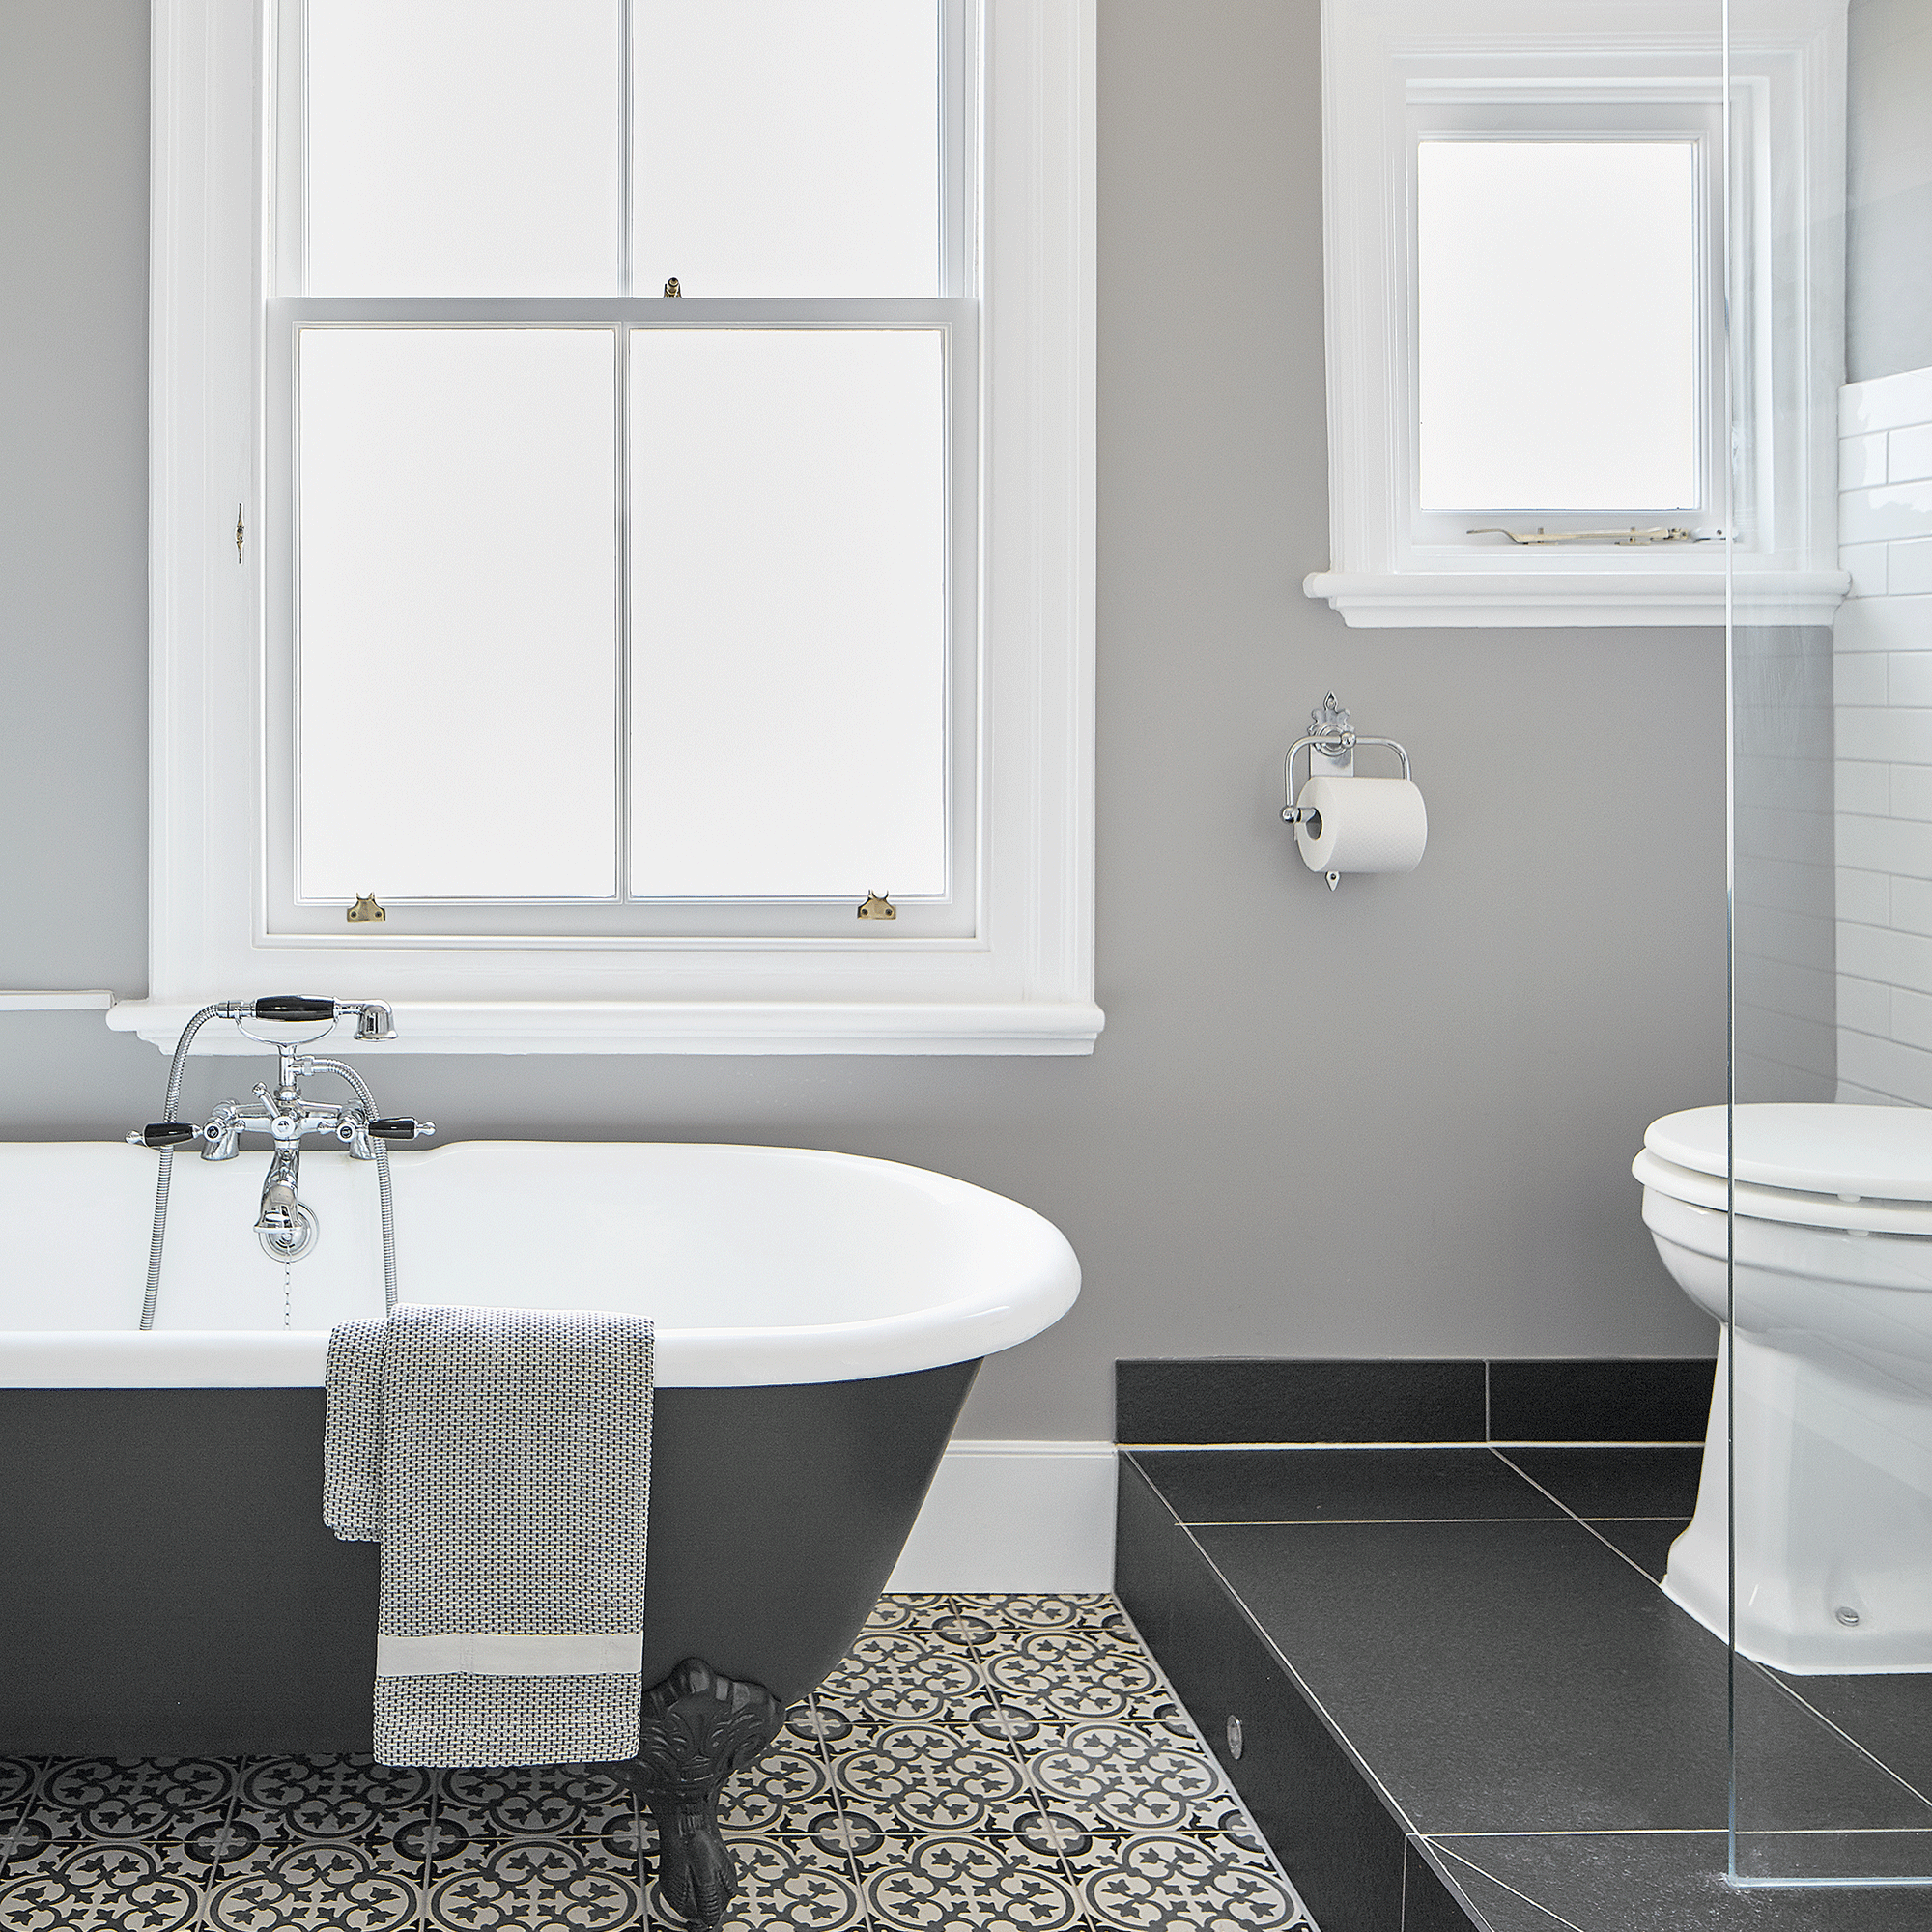 Grey bathroom with tiled floor